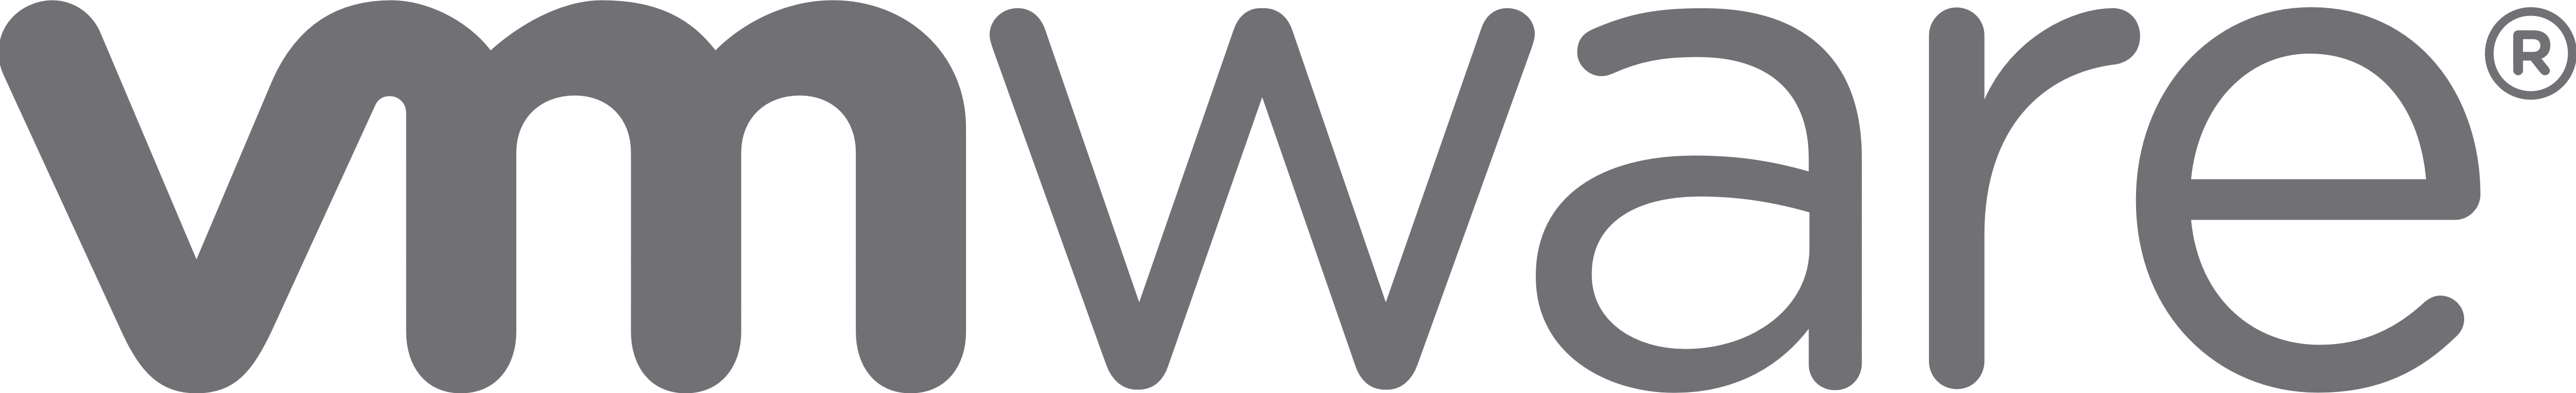 Vmware_logo_PNG1